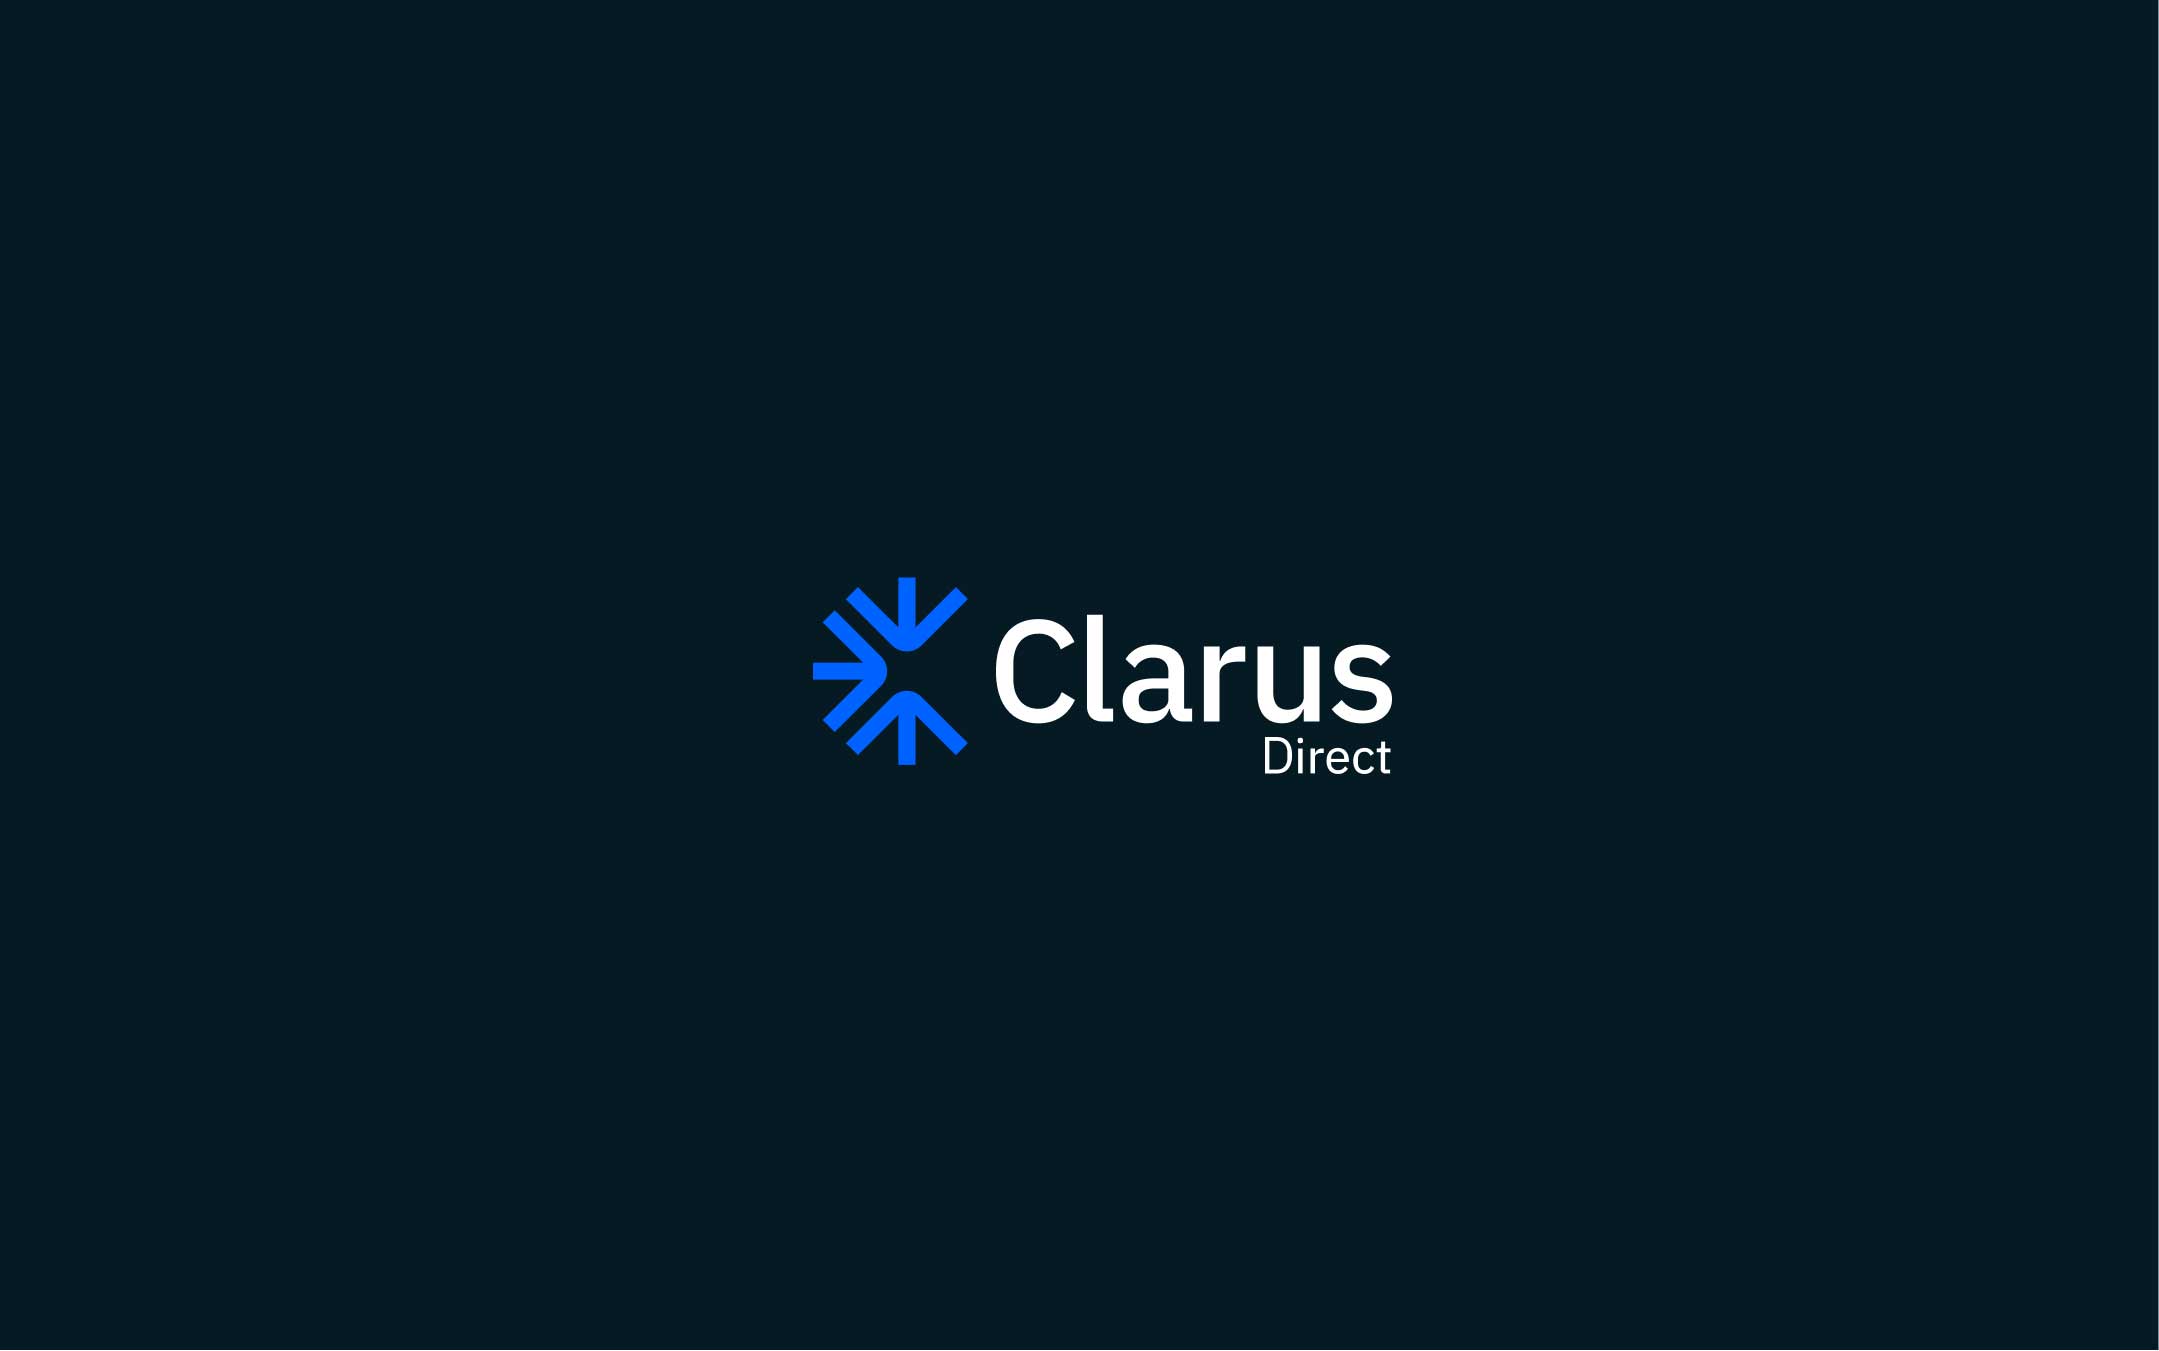 Clarus Direct logo